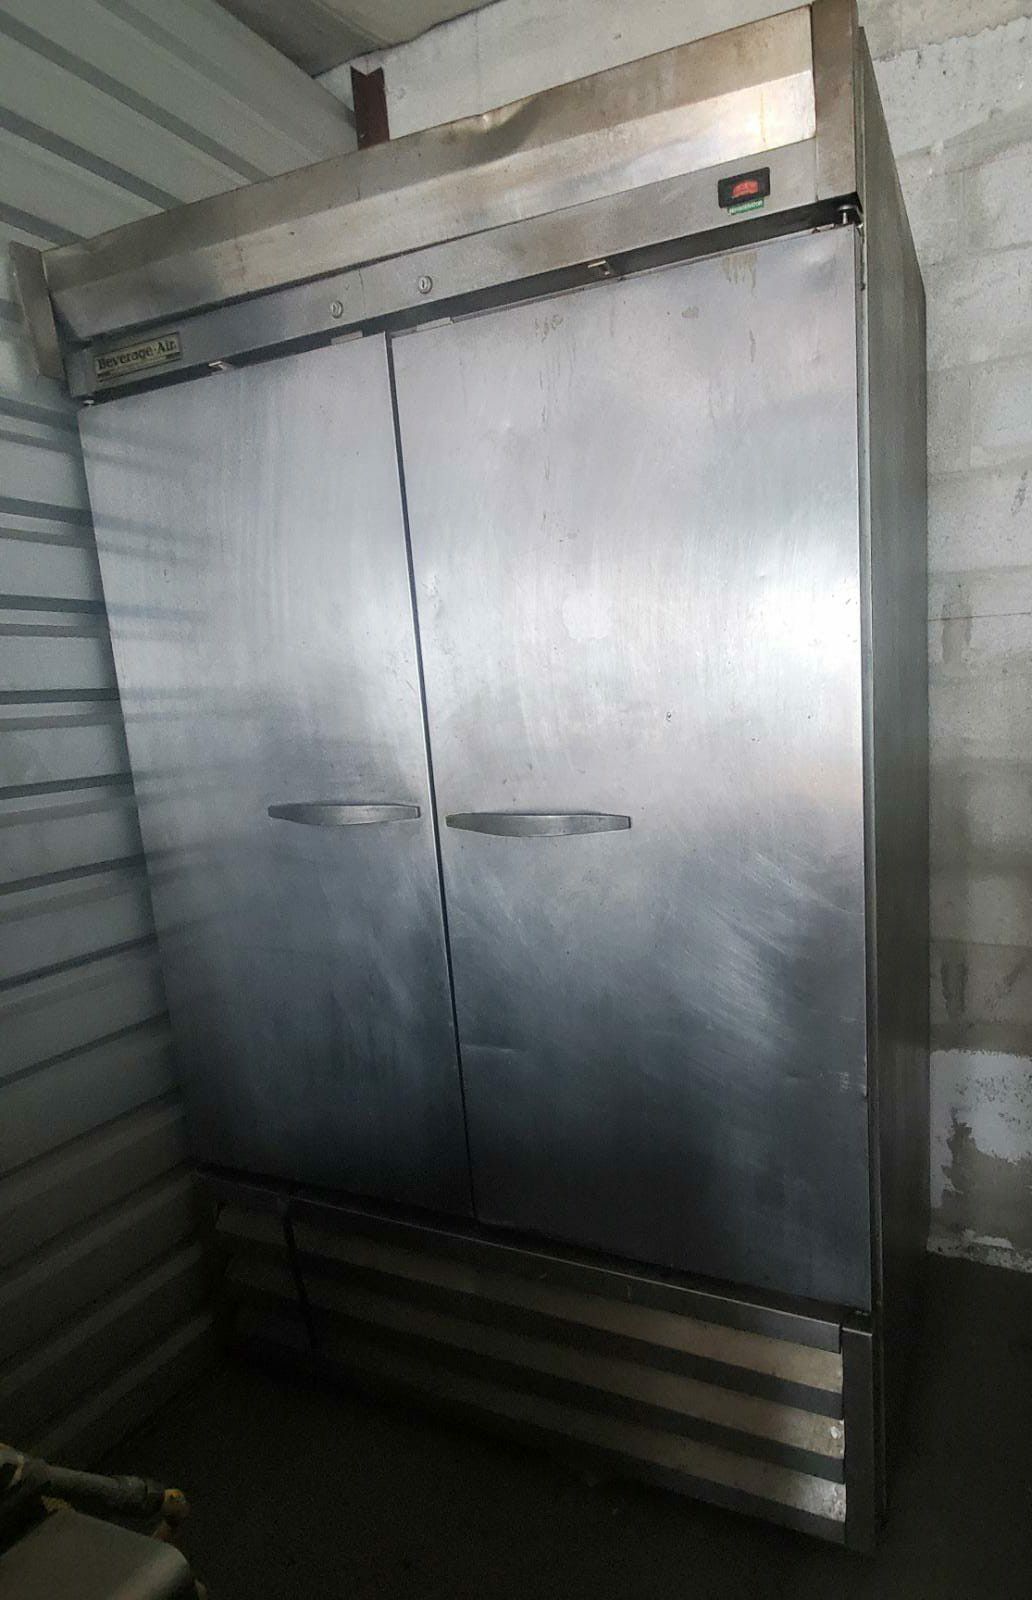 Commercial refrigerator